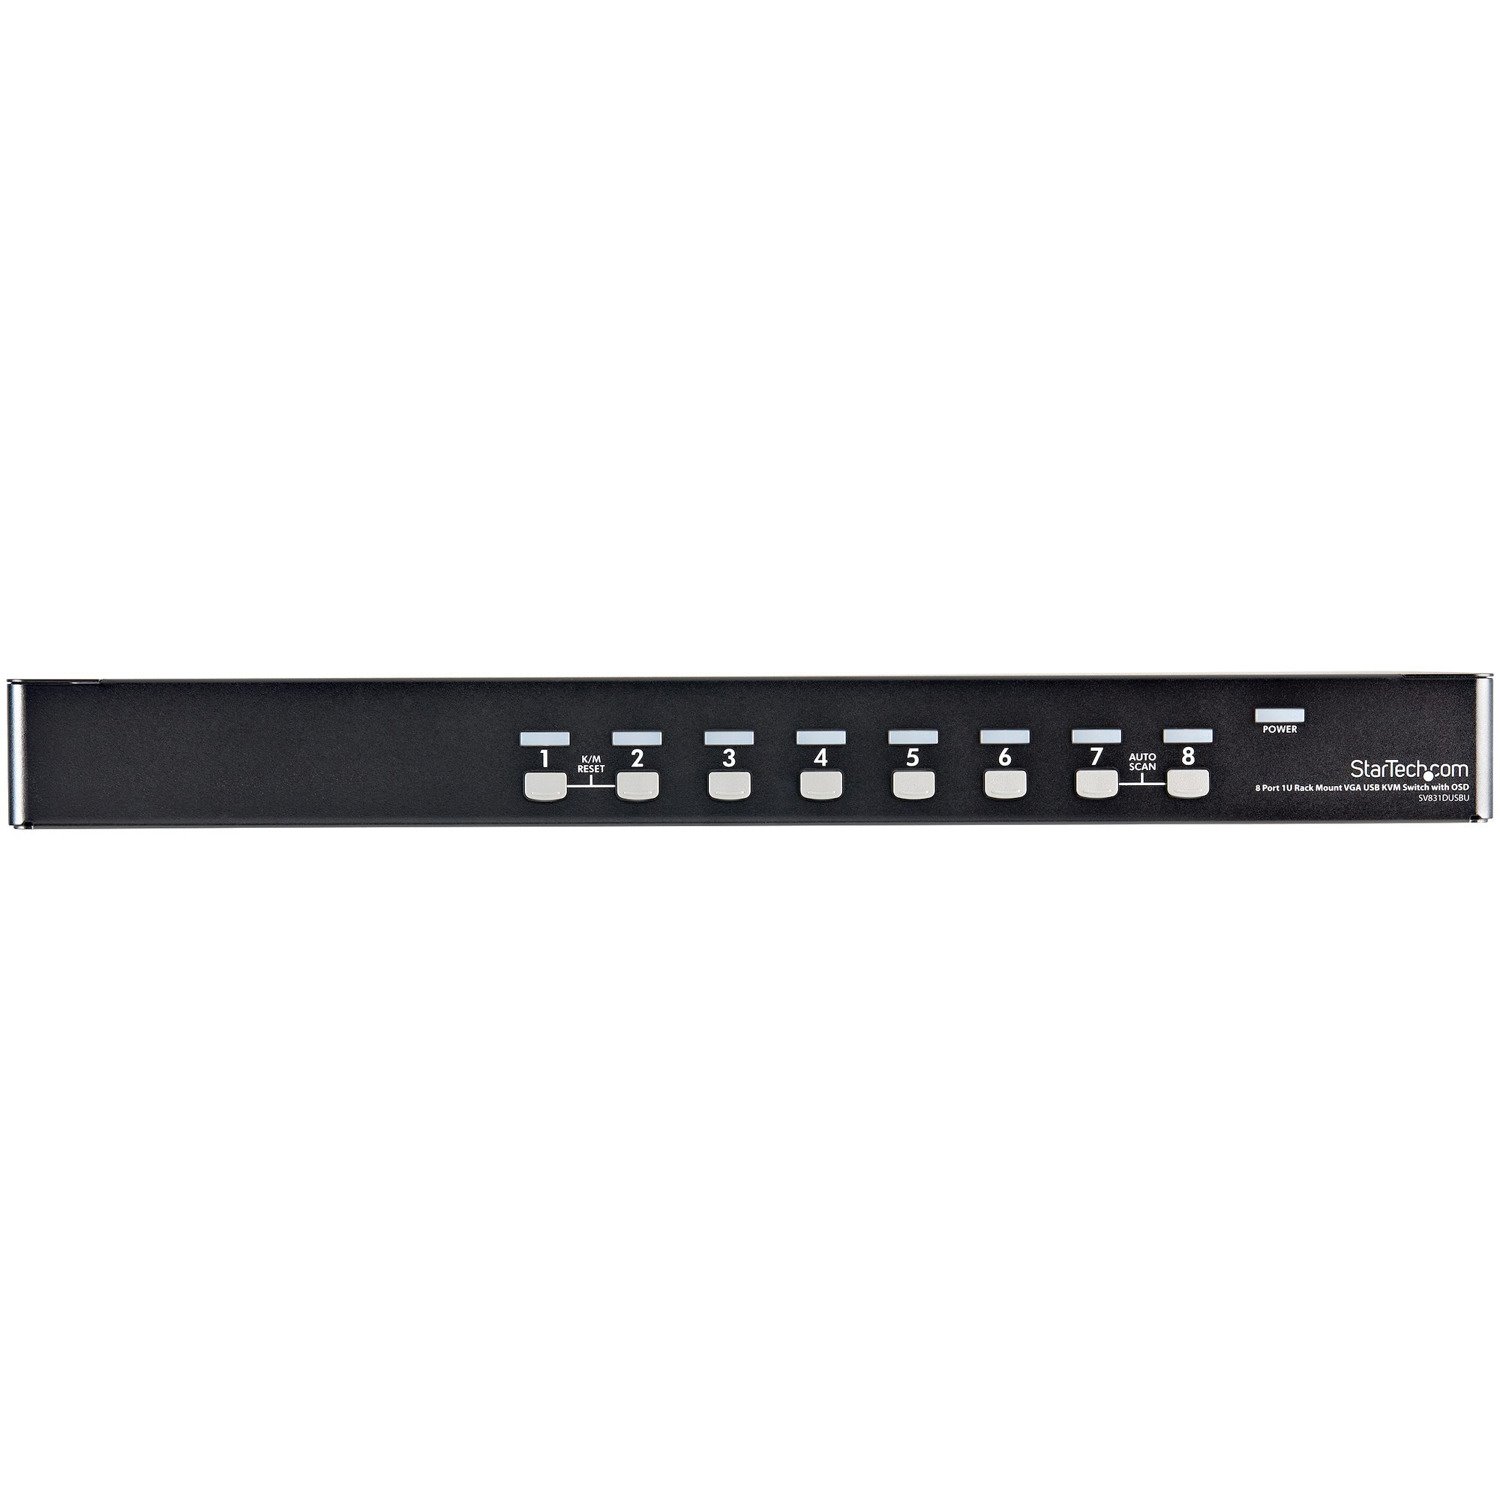 StarTech.com 8 Port 1U Rack Mount USB KVM Switch Kit with OSD and Cables